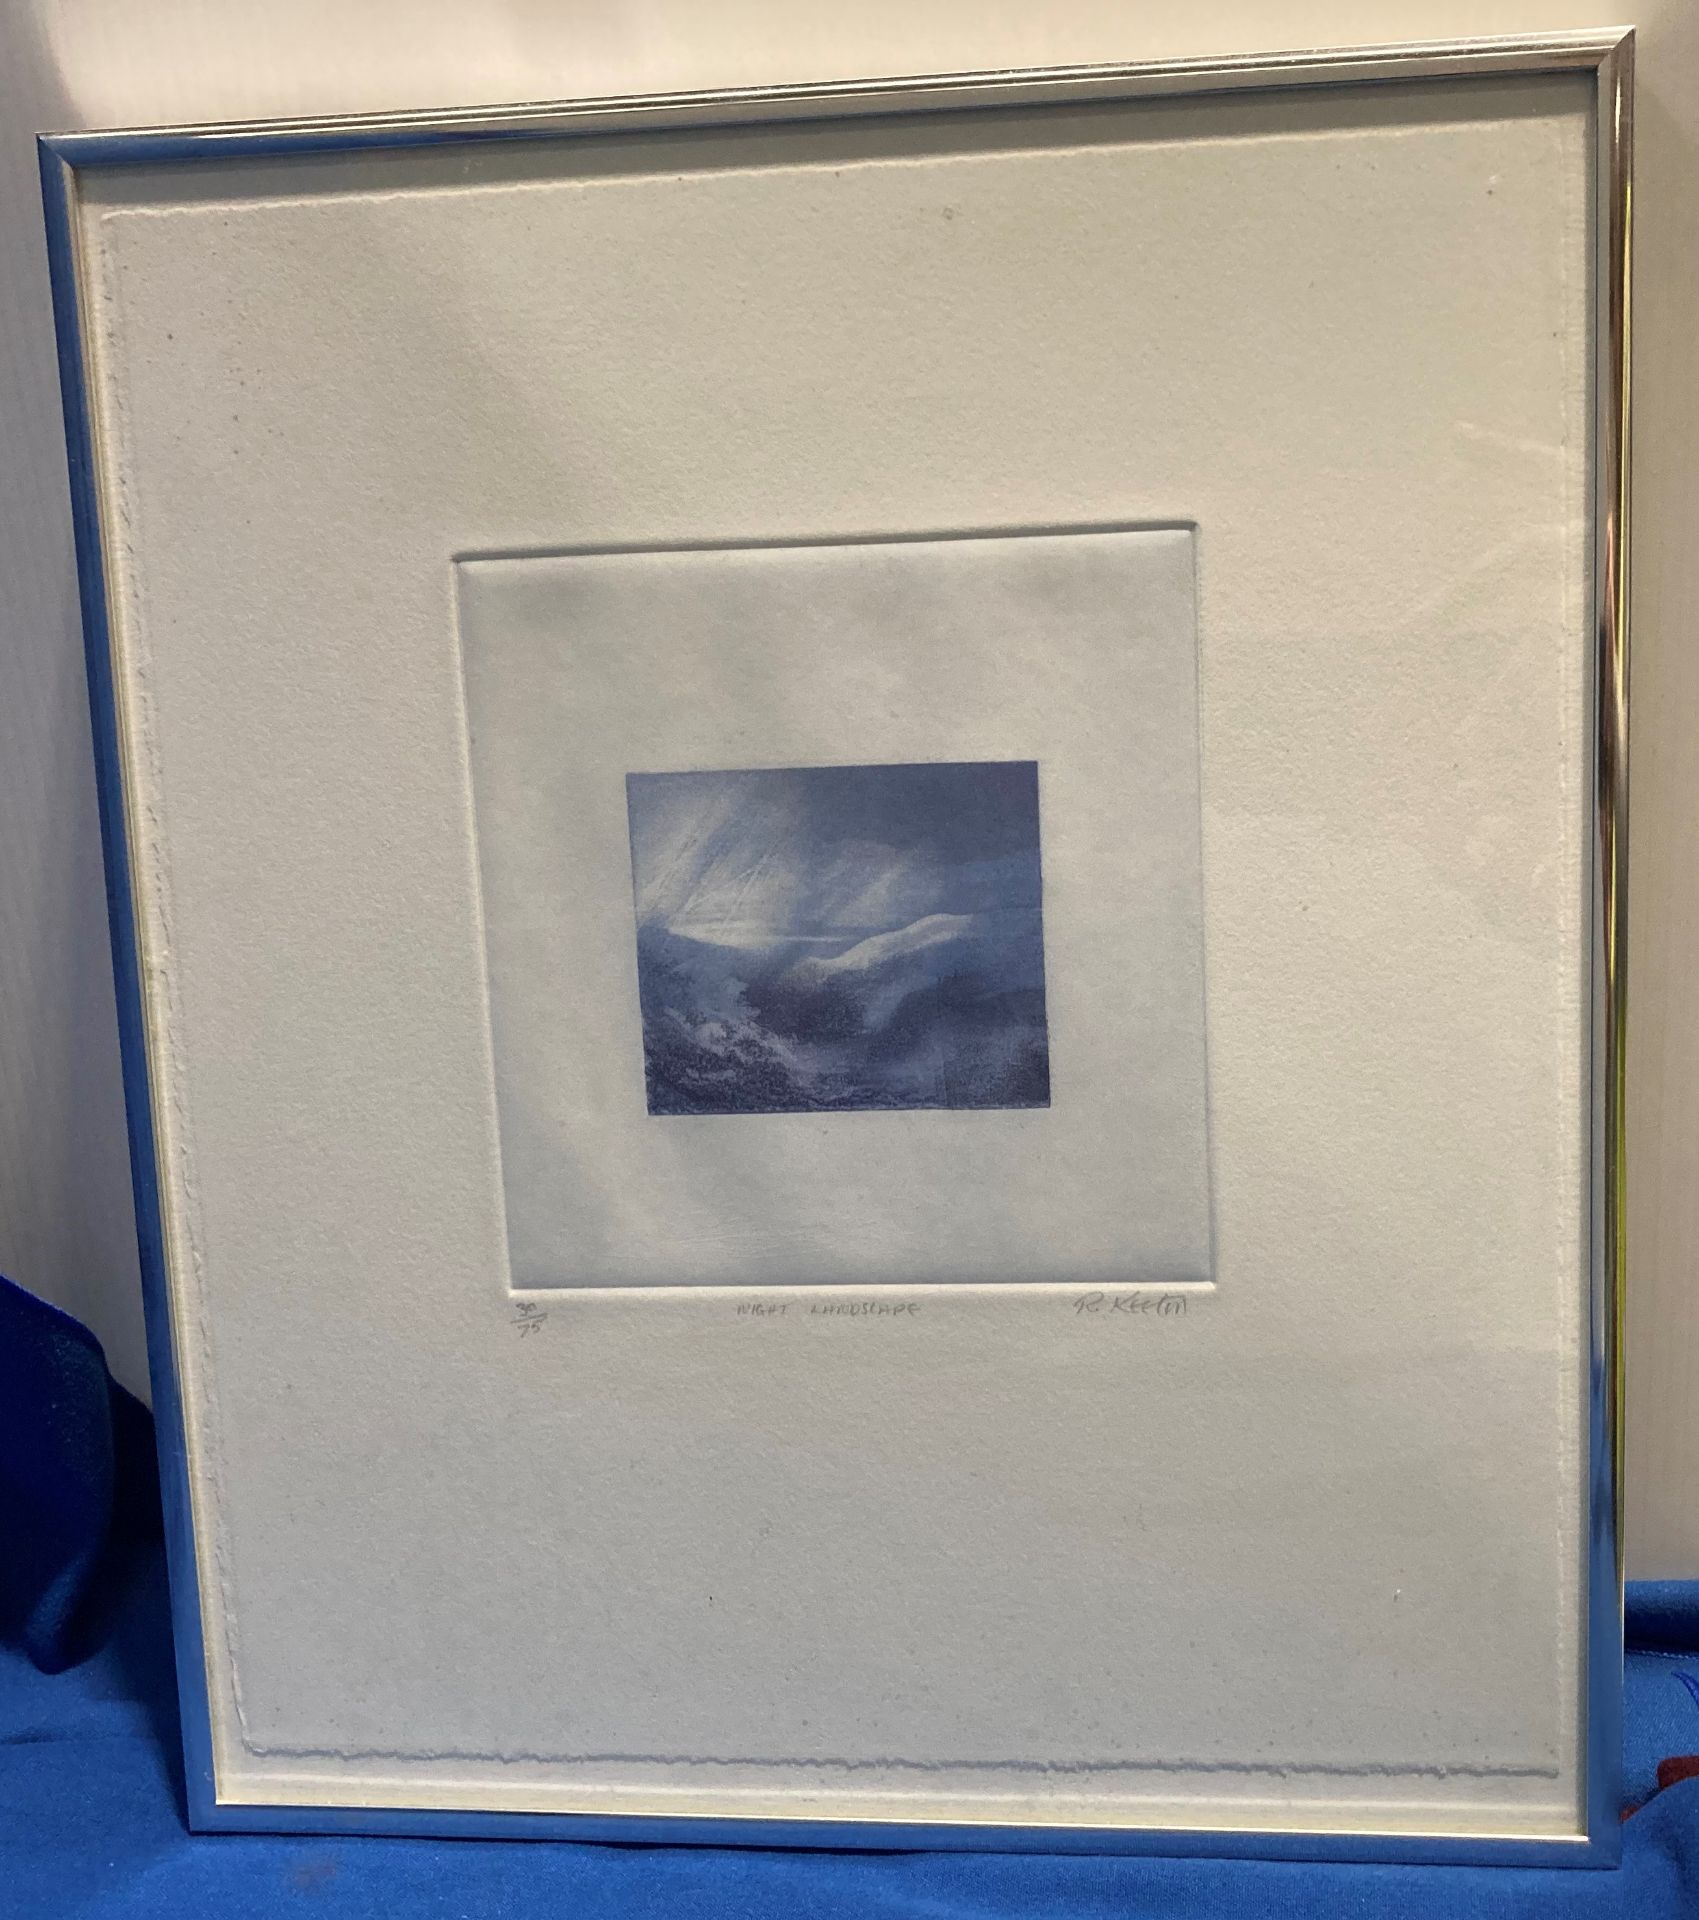 A framed, signed aquatint etching by Richard Keeton 'Night Landscape', - Image 2 of 5